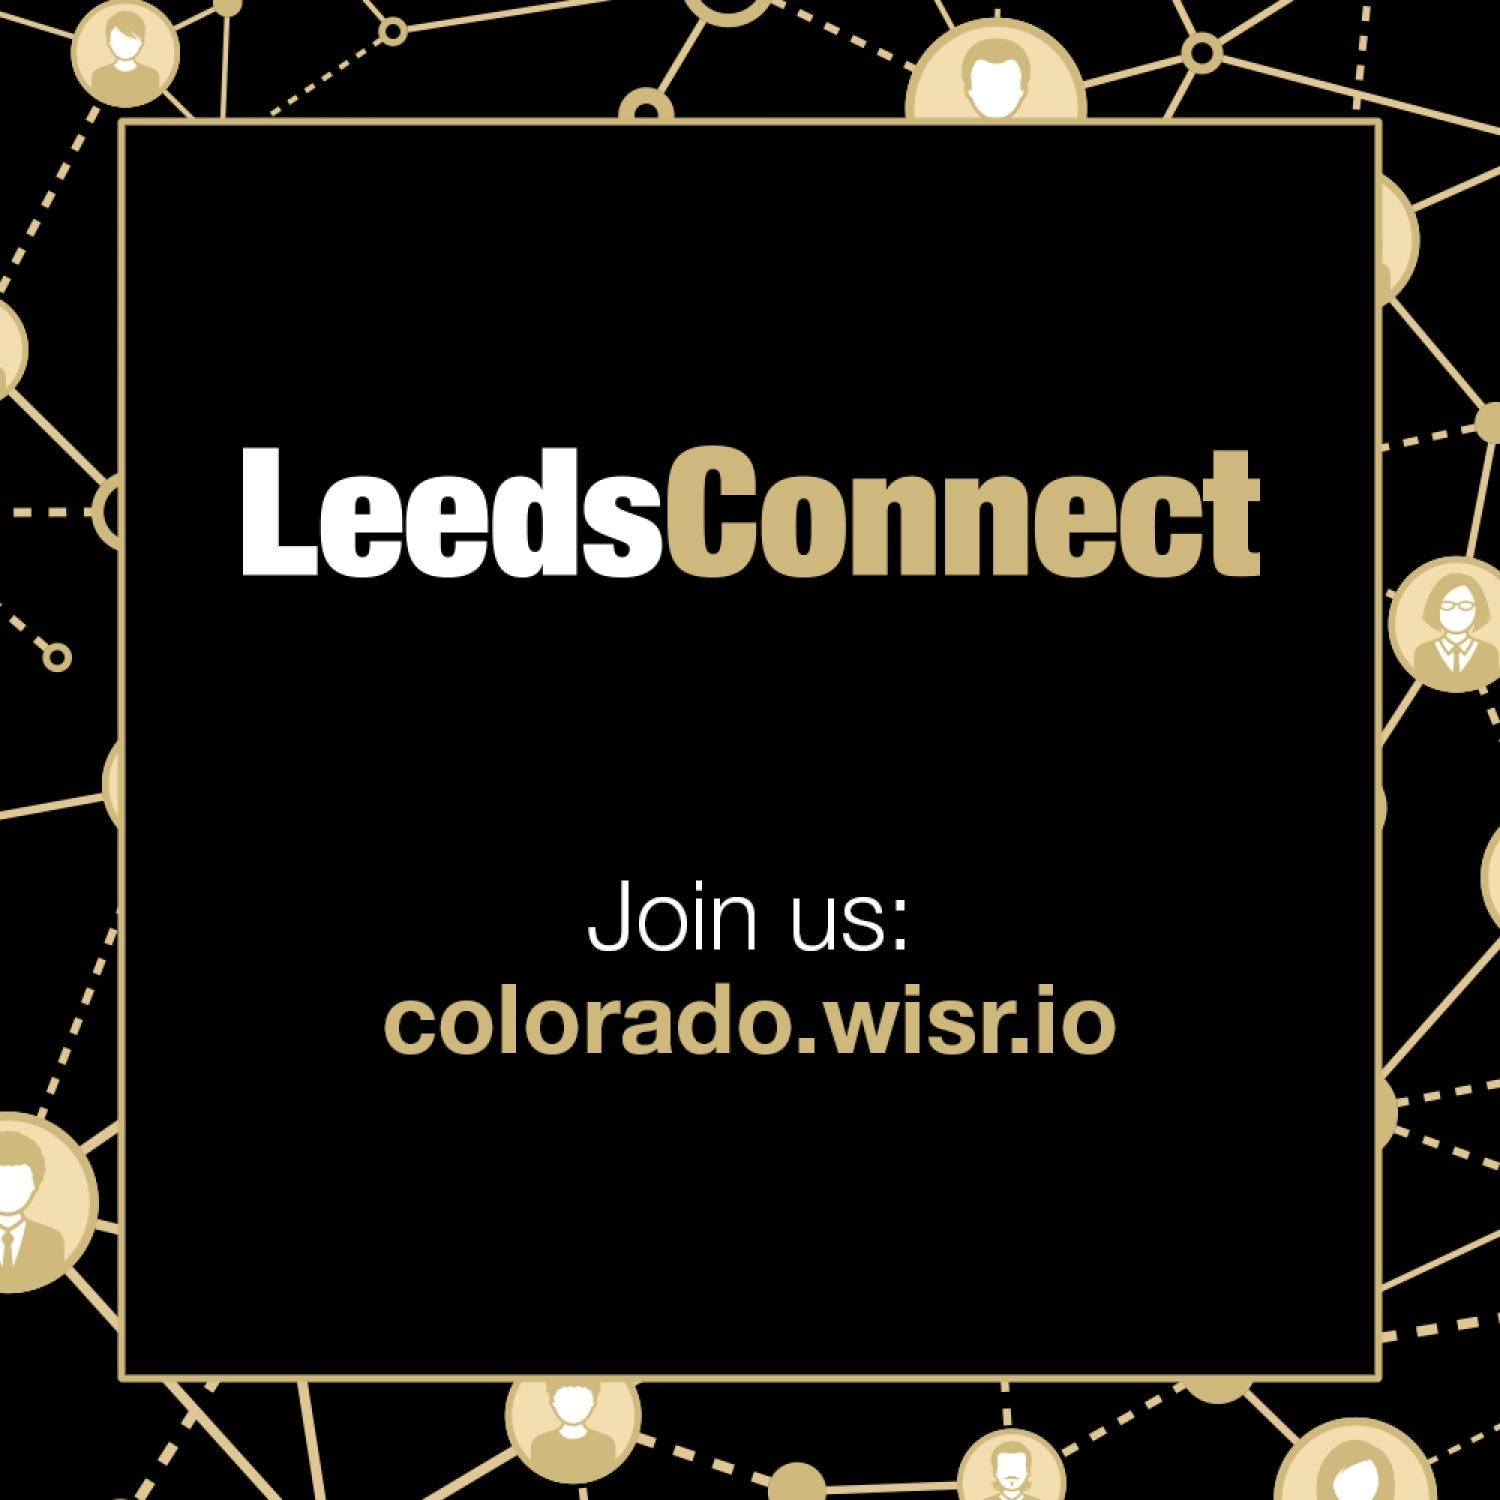 LeedsConnect - Join us at colorado.wisr.io